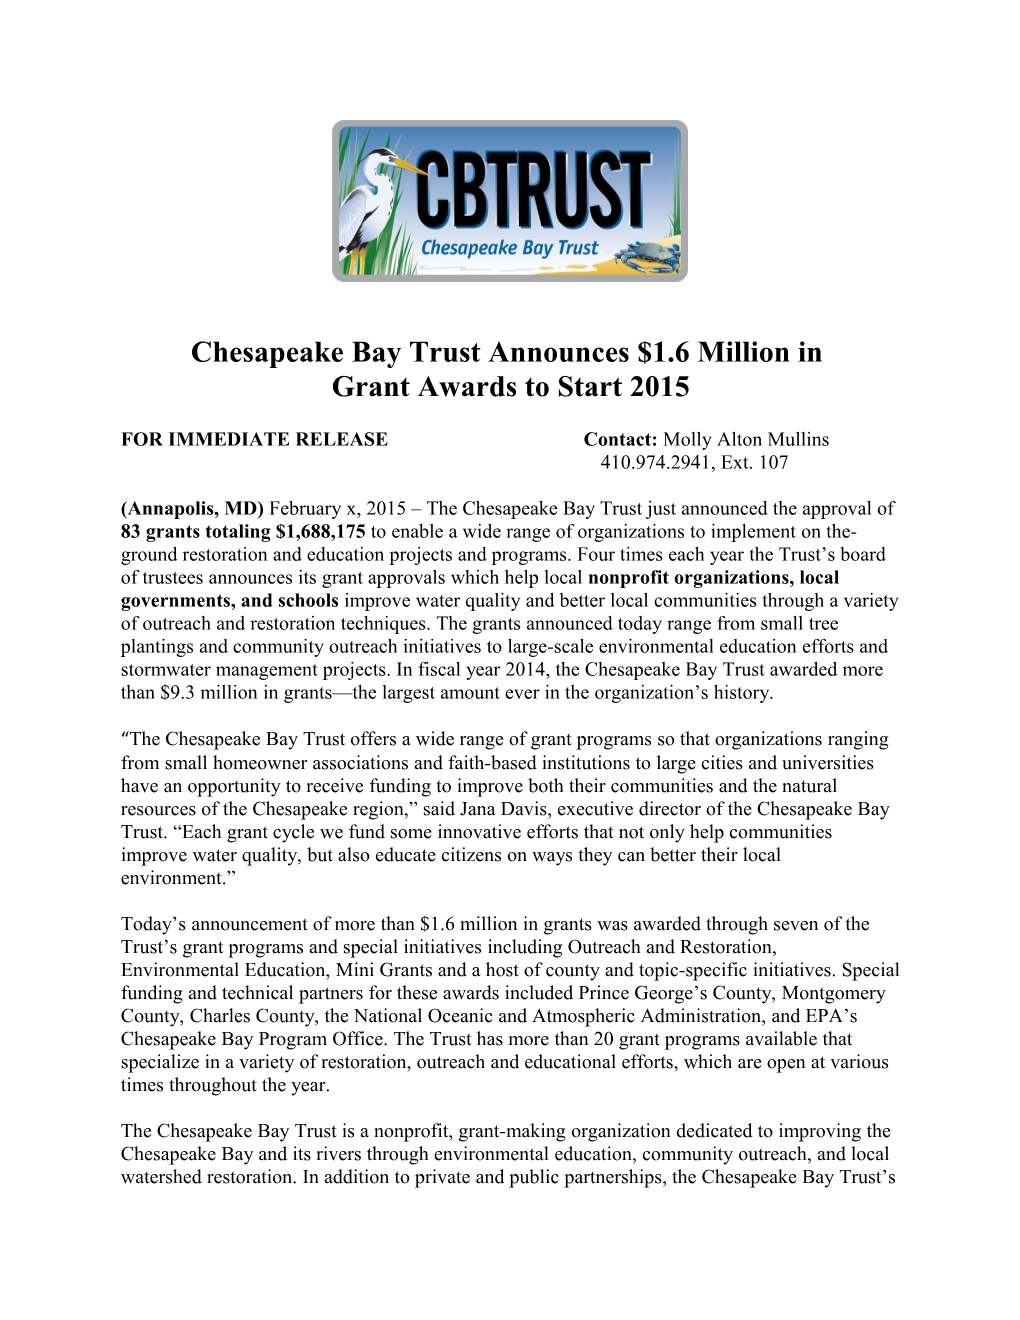 Chesapeake Bay Trust Announces $1.6 Million in Grant Awards to Start 2015